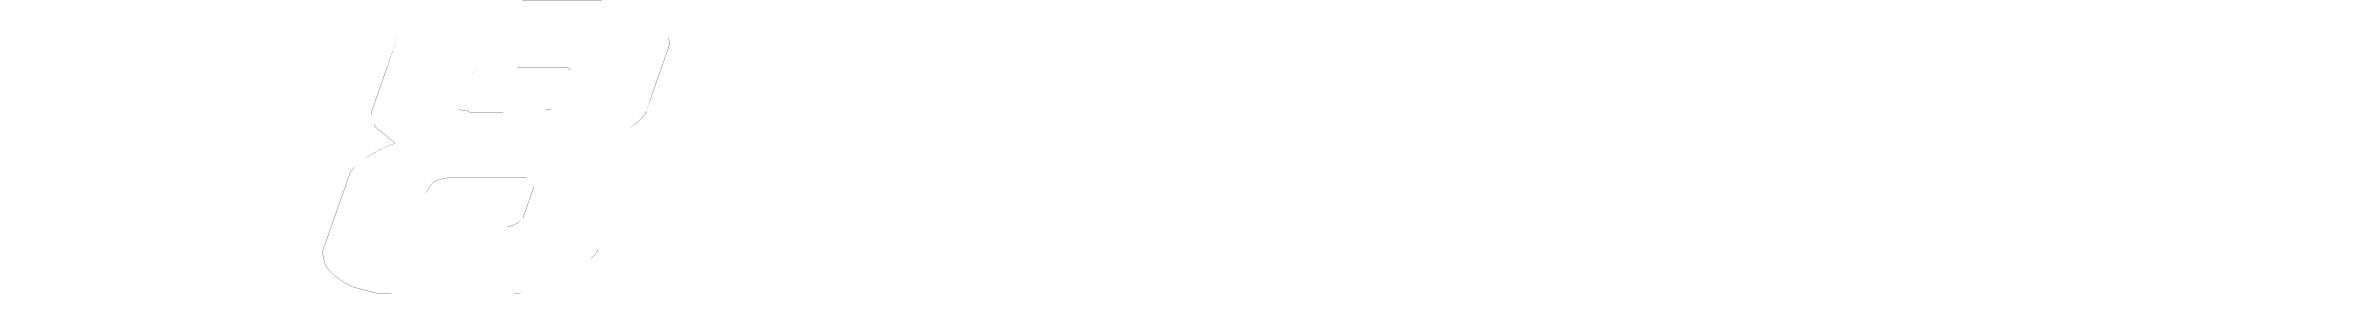 88Rotors Offroad Logo